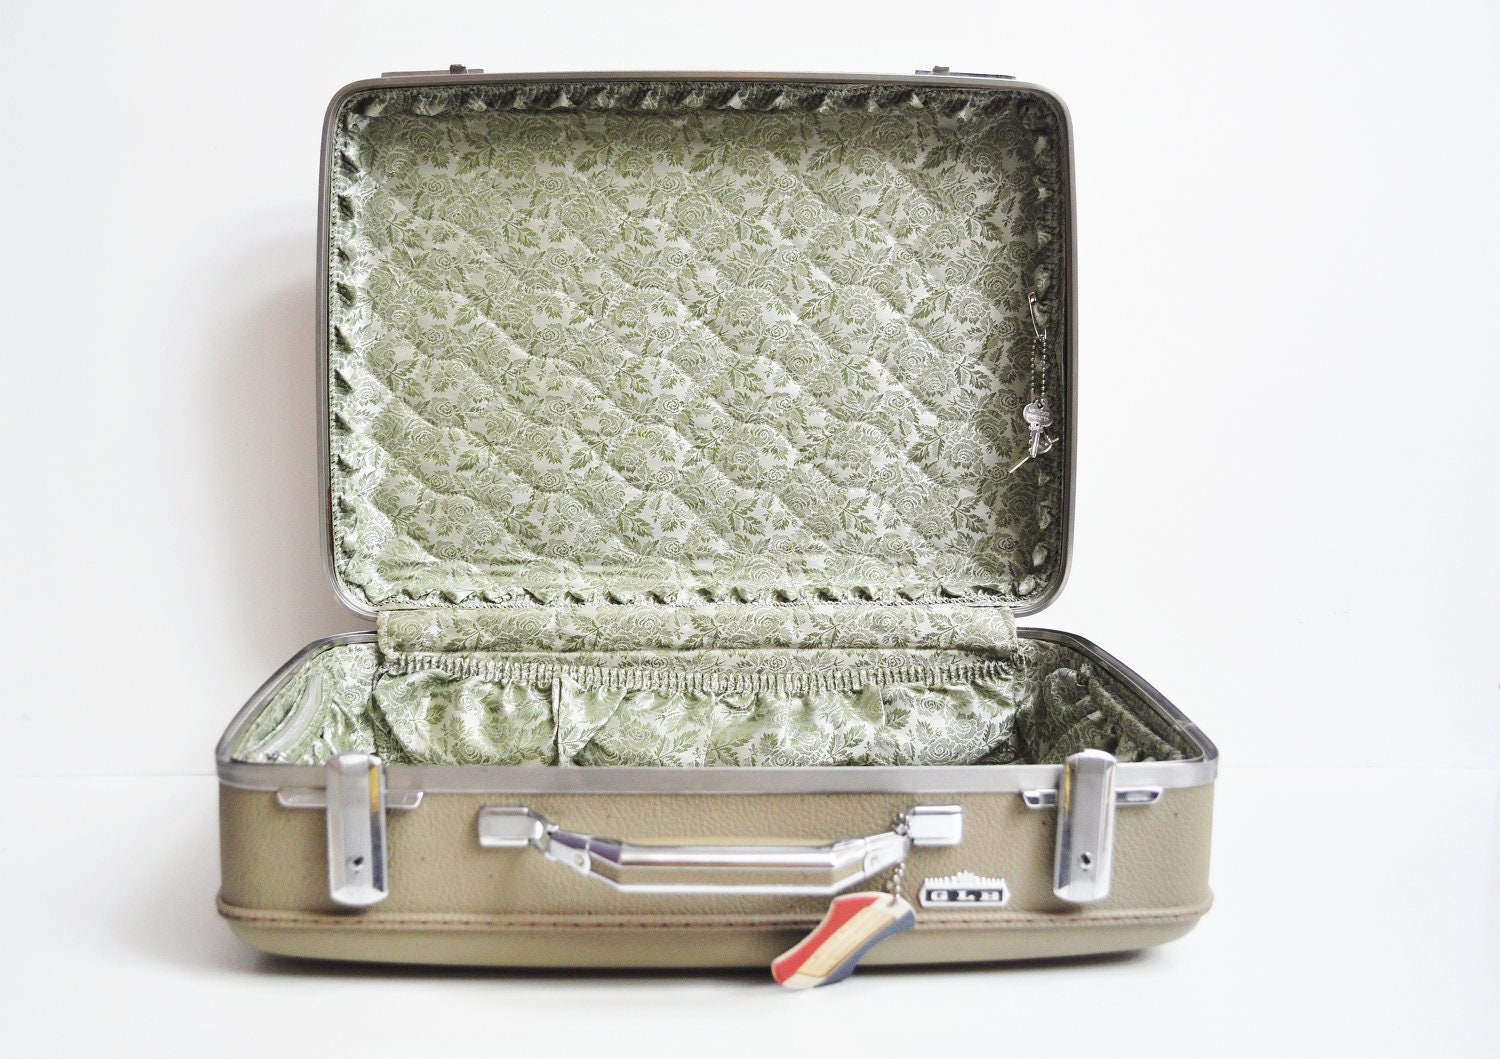 American Tourister Tiara Suitcase - Grey/Beige - thewhitepepper